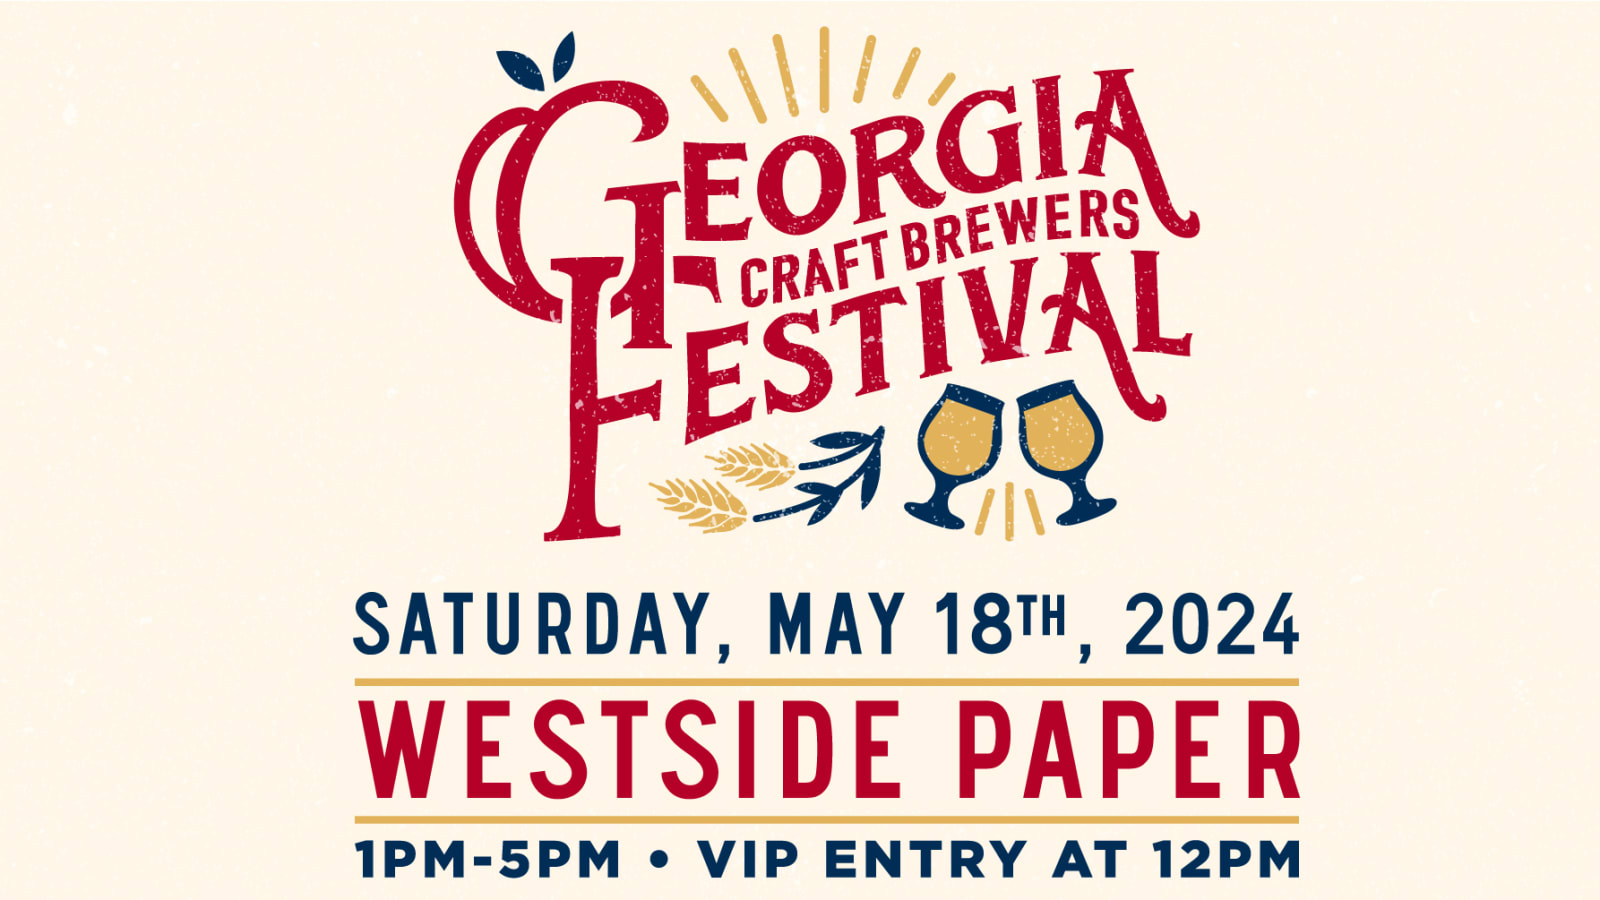 Georgia Craft Brewers Festival